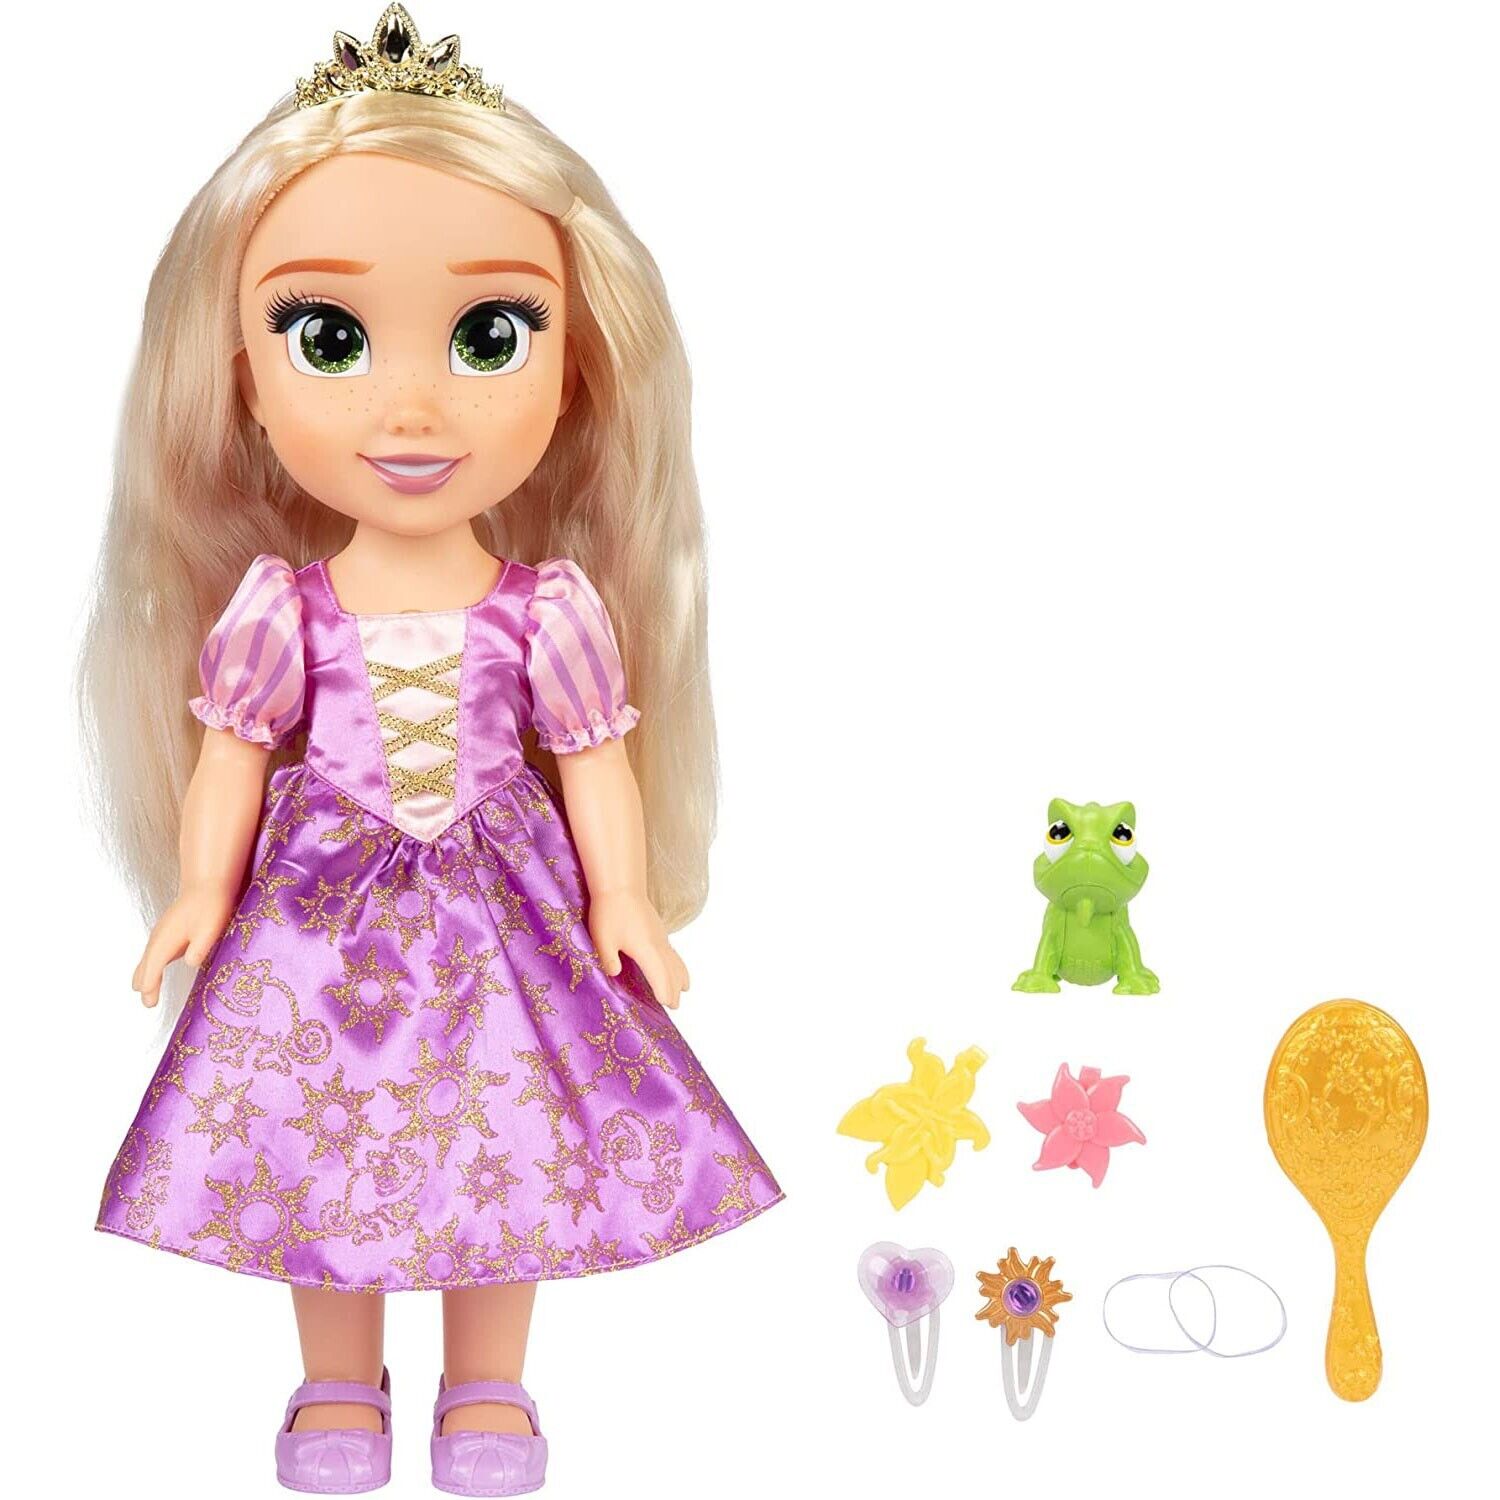 New Disney Princess Rapunzel & Pascal Singing Toddler Doll - Perfect Gift!